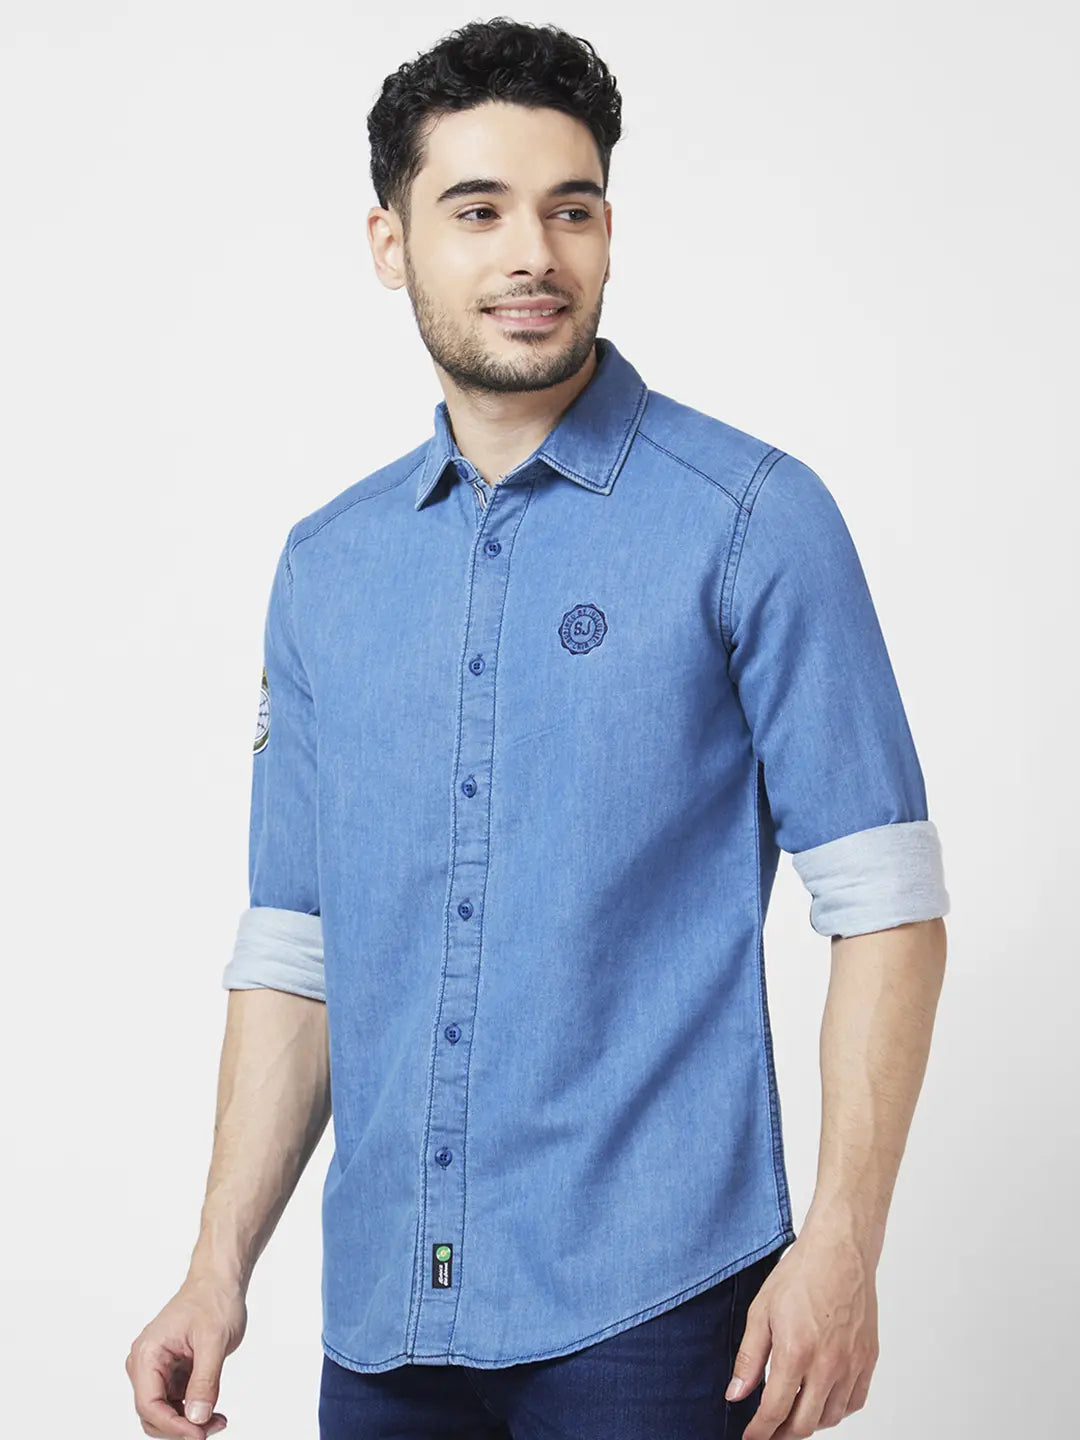 Cotton Shirts for Men | Buy Shirts Online India - Thestiffcollar –  Thestiffcollar.com